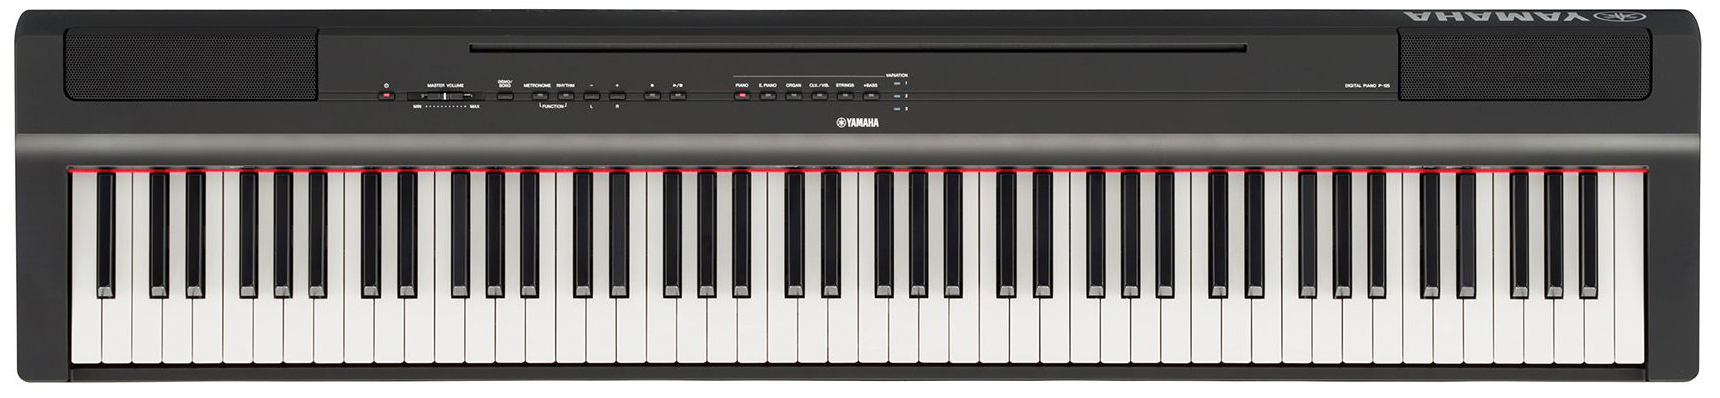 Yamaha P-125B Цифровое пианино 88кл, клавиатура GHS (Grand Hammer standard) матовая, 192 гол.полиф